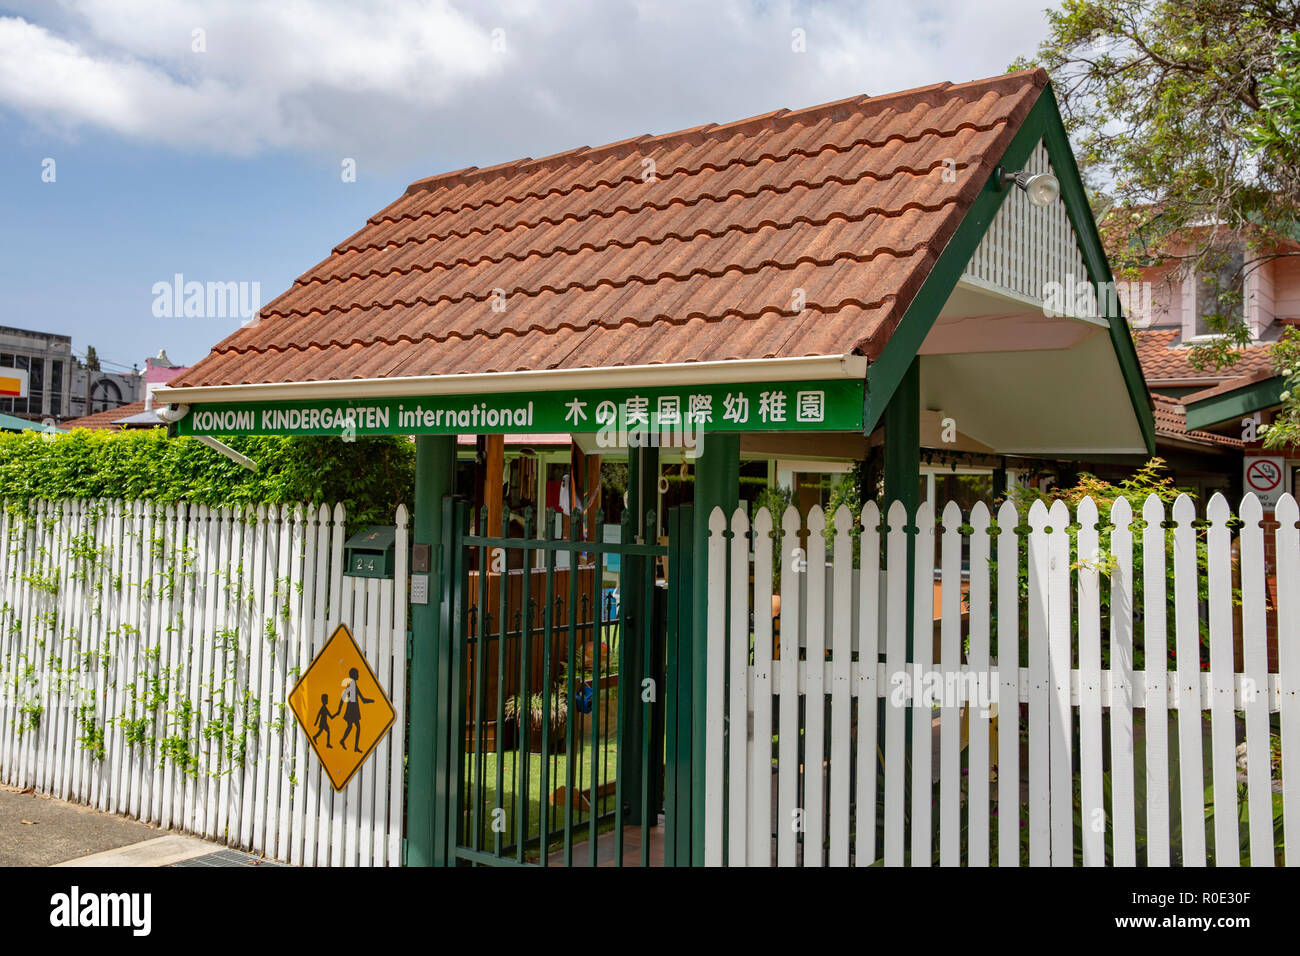 Konomi international kindergarten school in Willoughby,Sydney,Australia Stock Photo